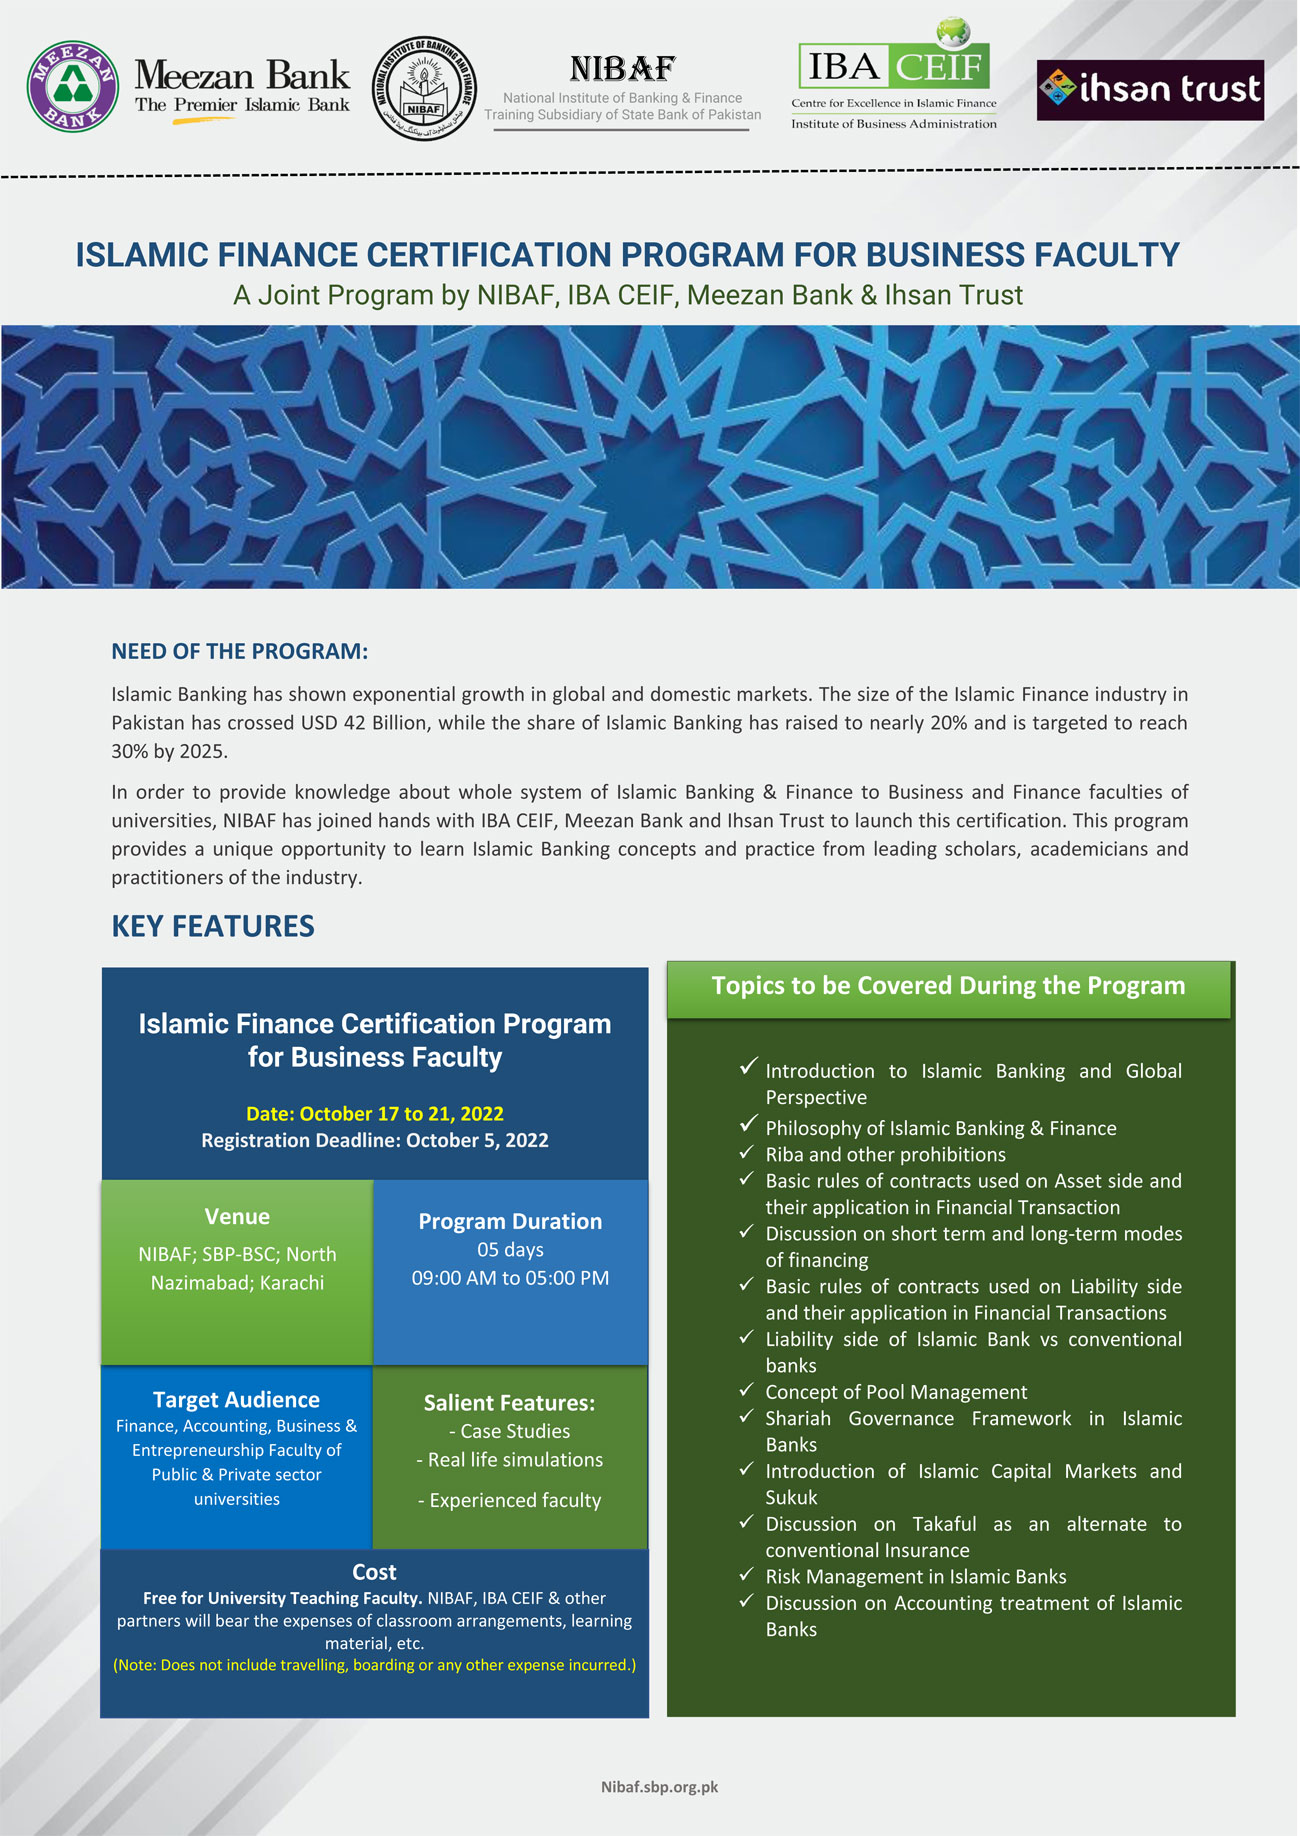 Islamic Finance Certification Program for Business Faculty